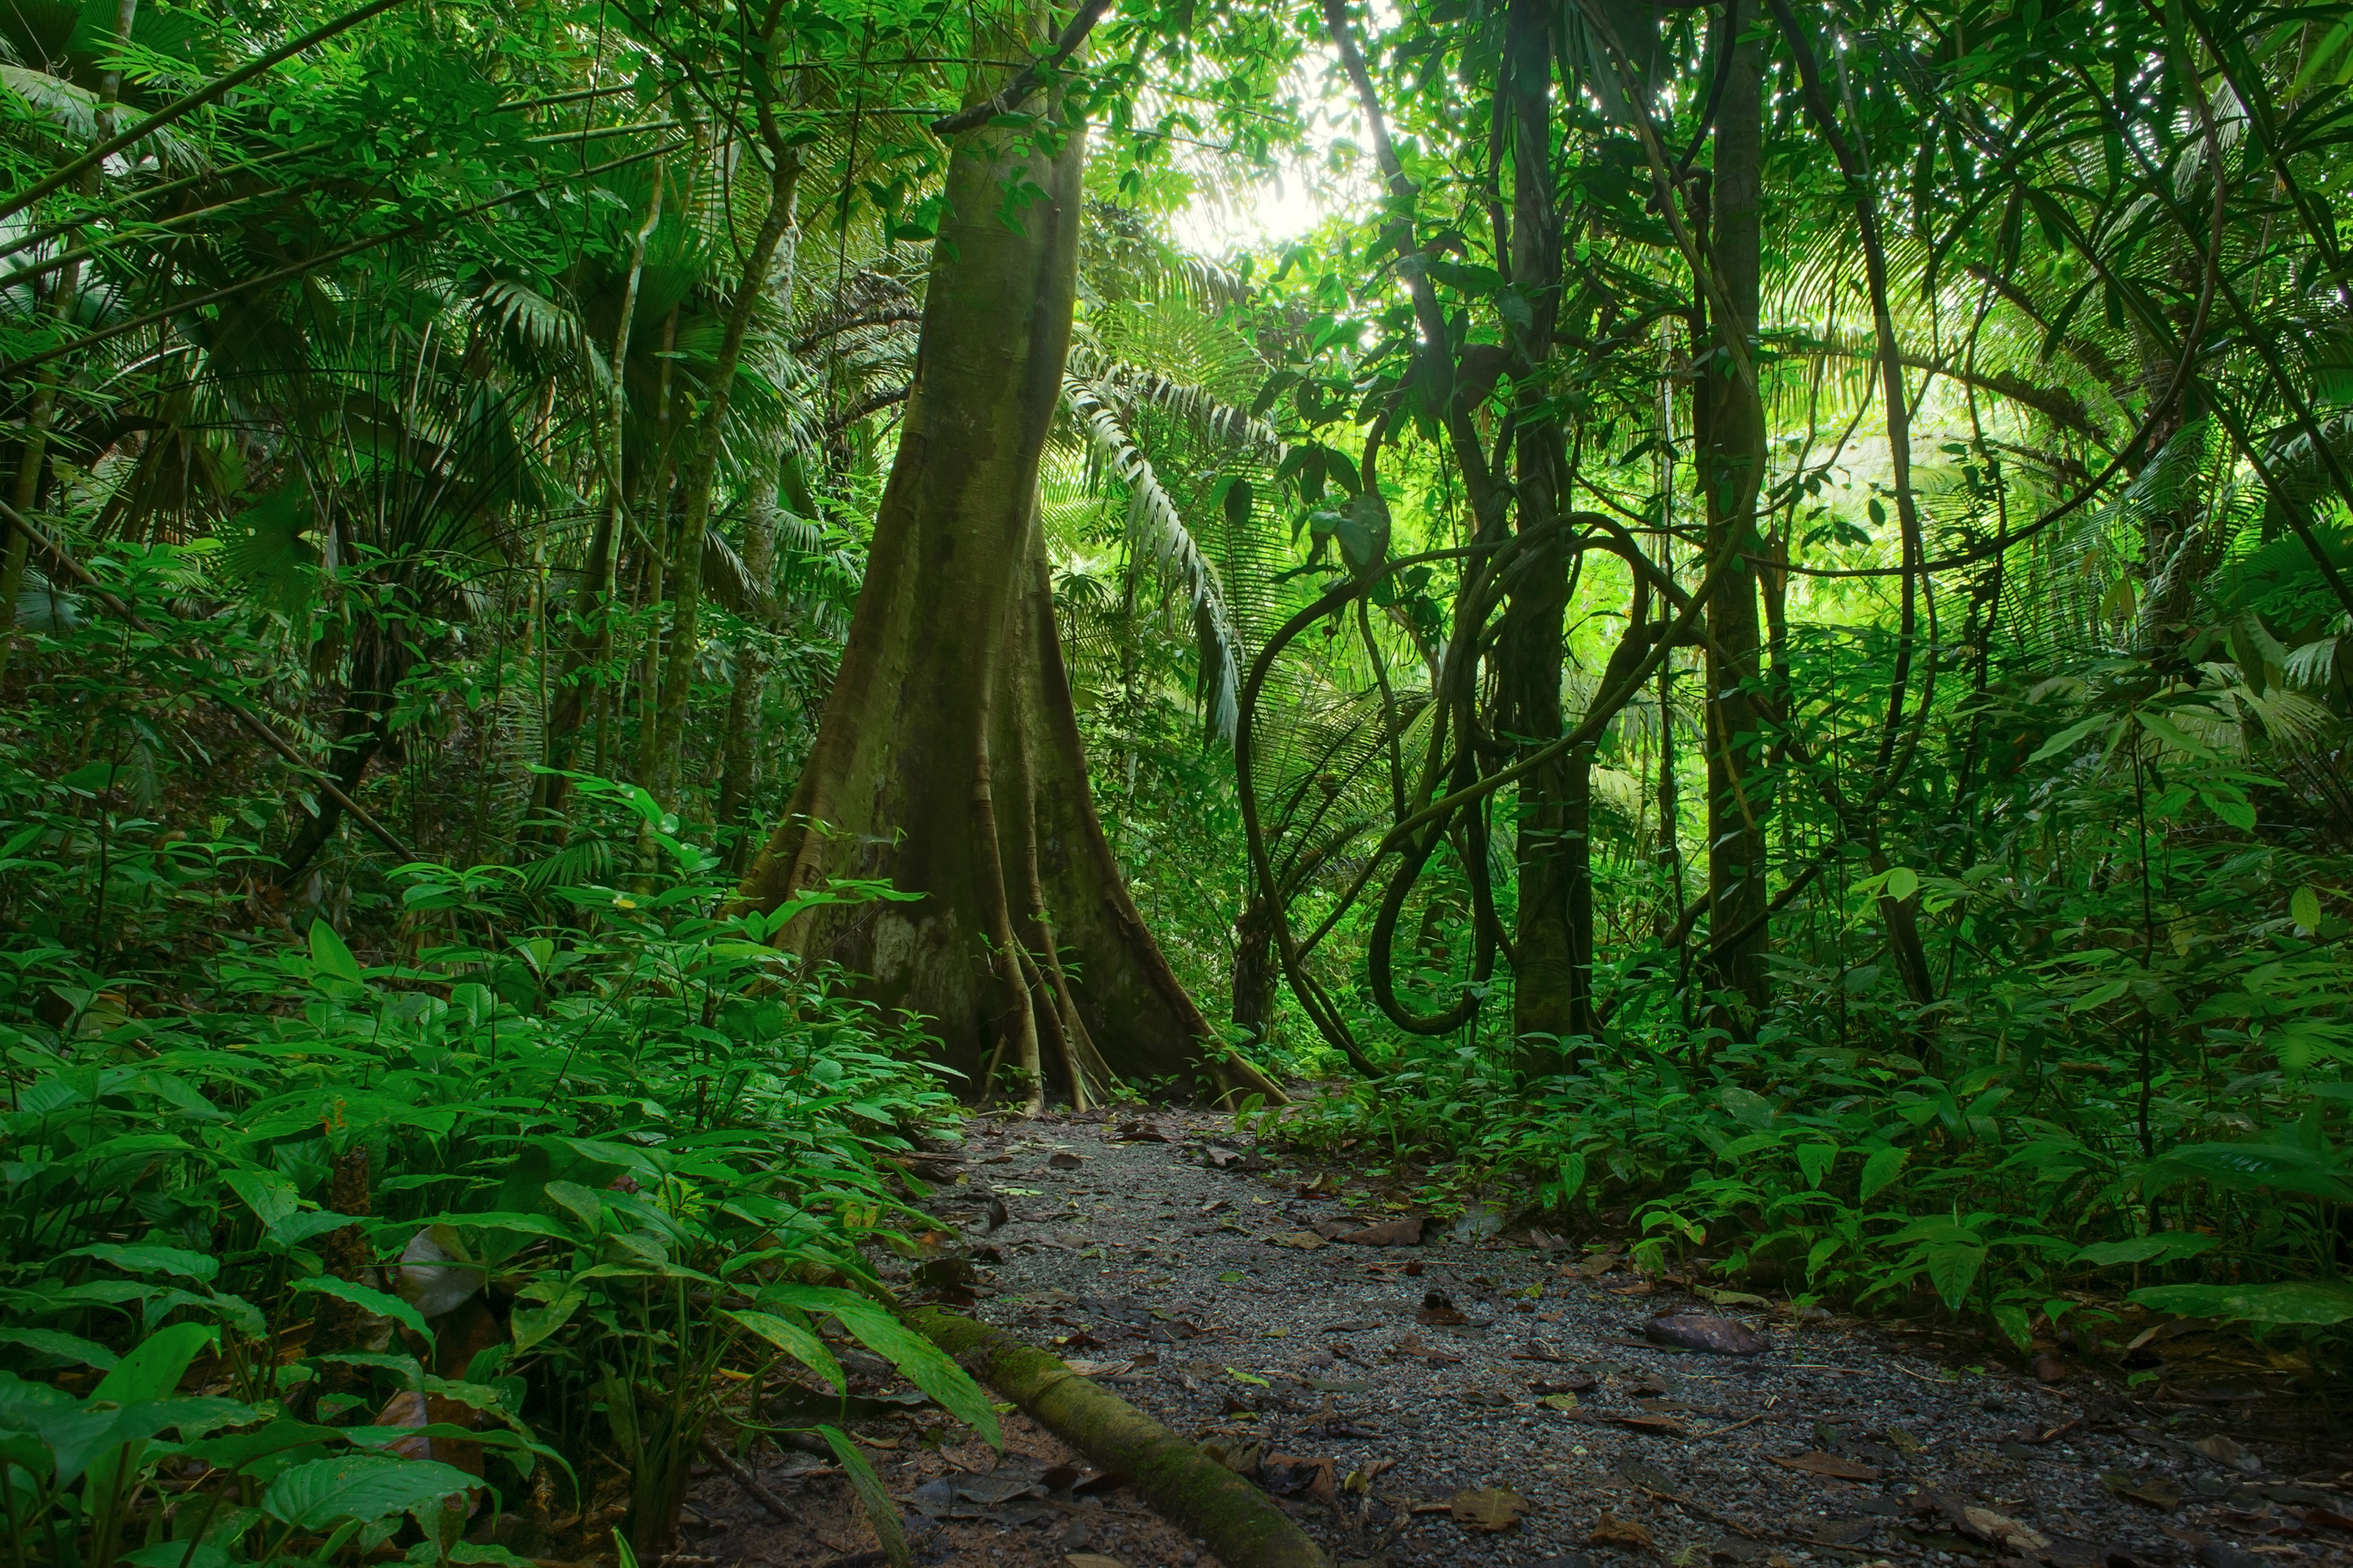 794635 descargar imagen jungla, tierra/naturaleza, bosque, verdor, naturaleza, camino, árbol: fondos de pantalla y protectores de pantalla gratis